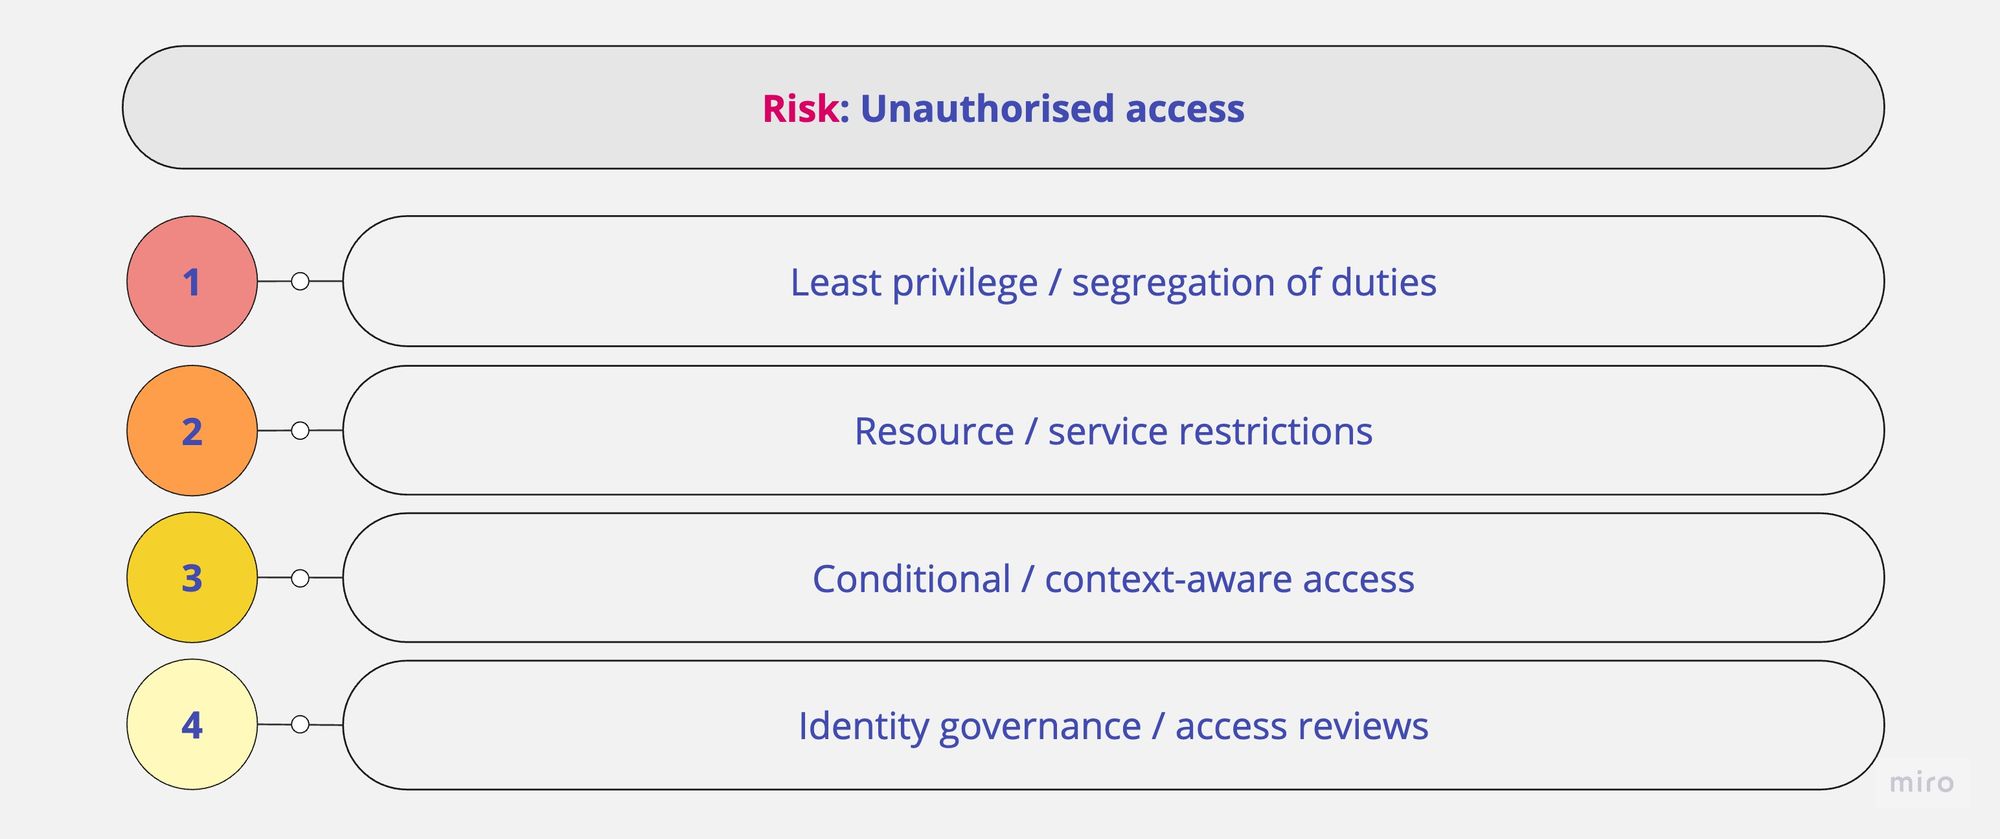 Cloud security risk - unauthorised access